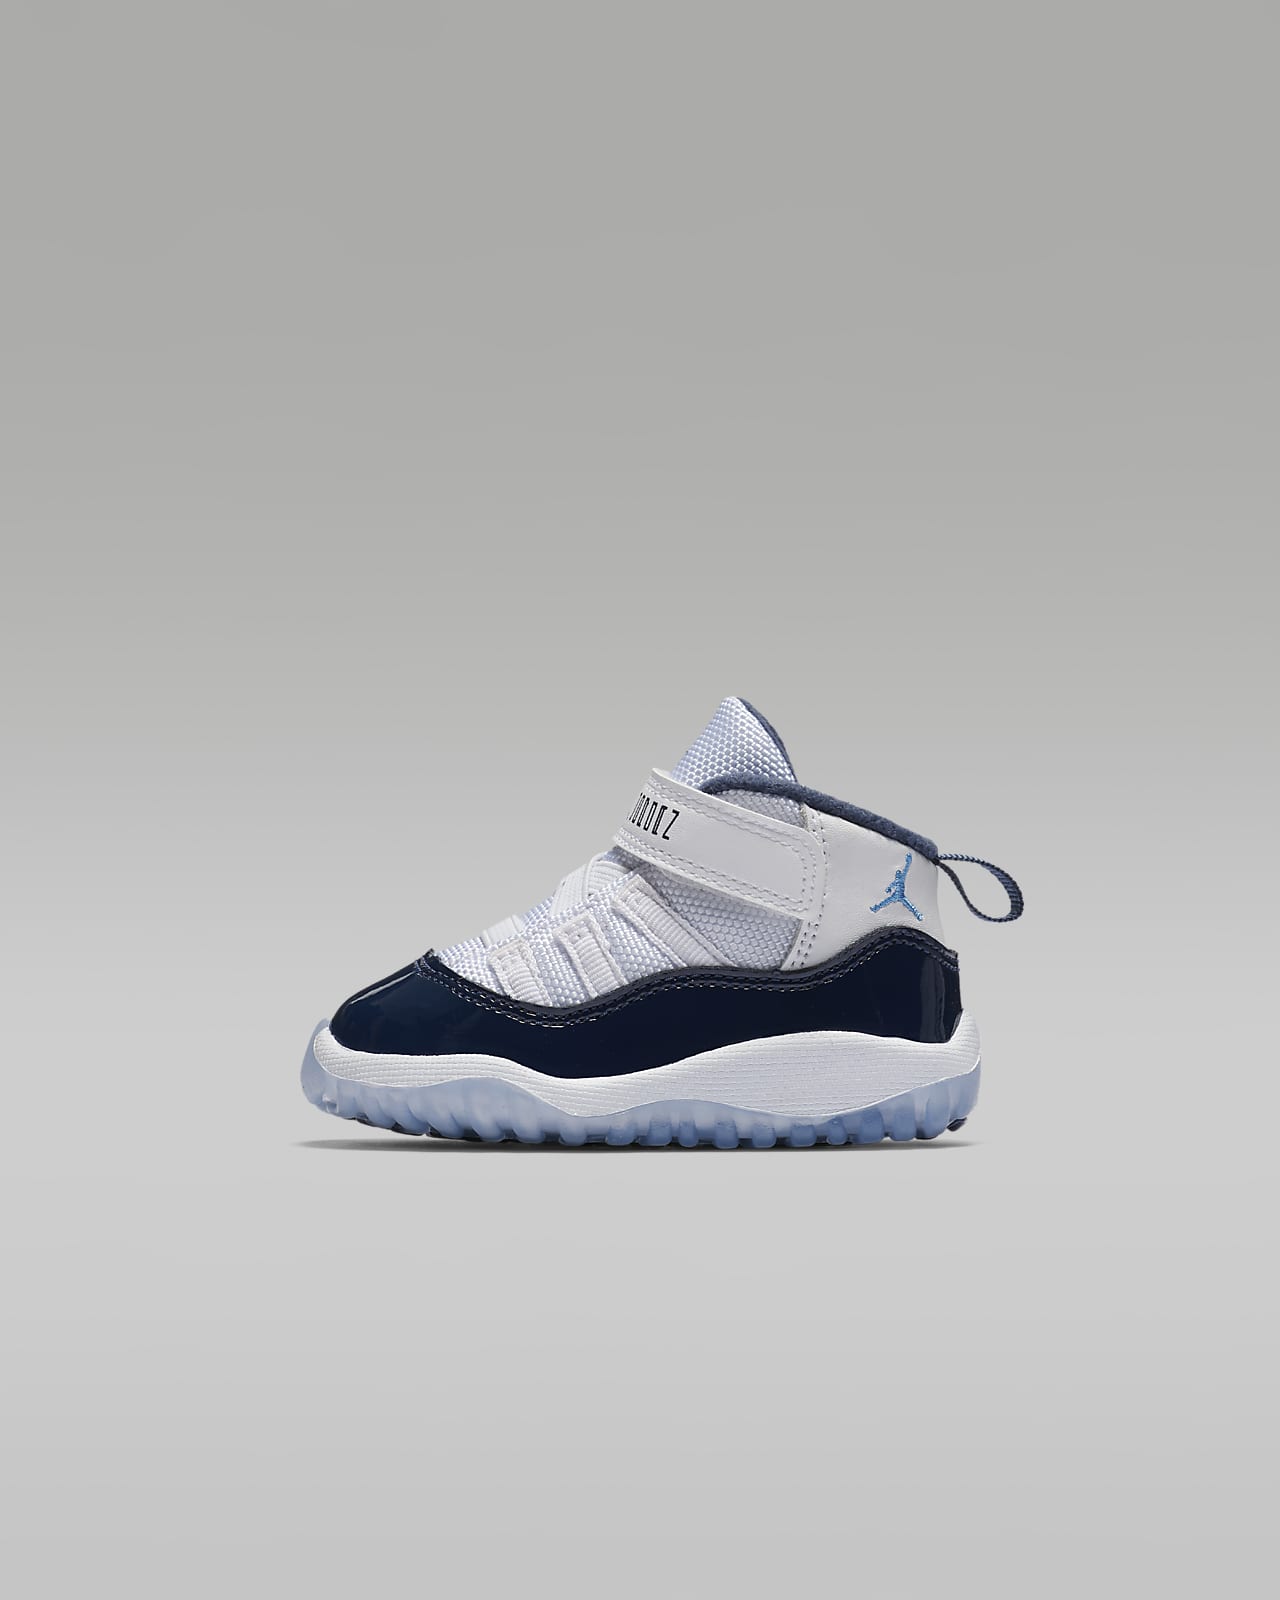 Jordan 11 Retro BT 复刻婴童运动童鞋